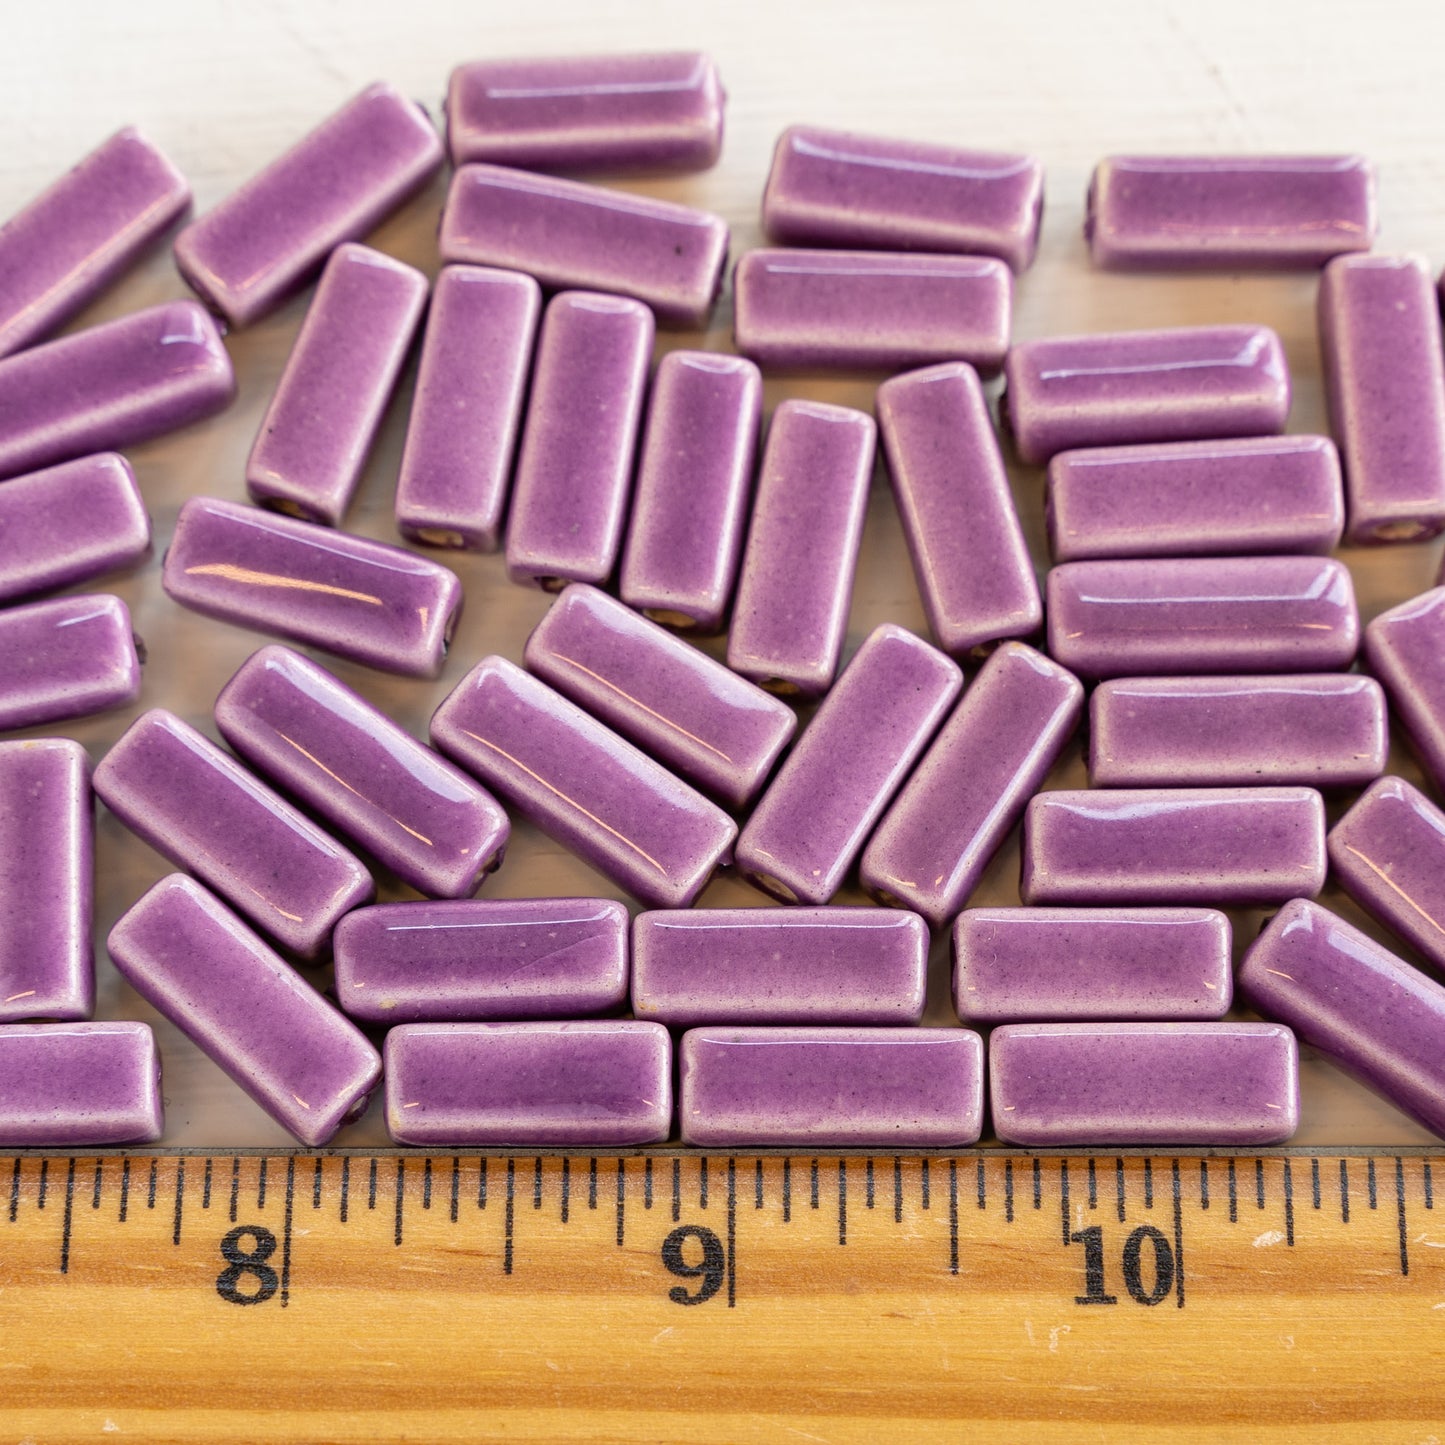 18mm Shiny Glazed Ceramic Rectangle Tube Beads - Lilac Purple